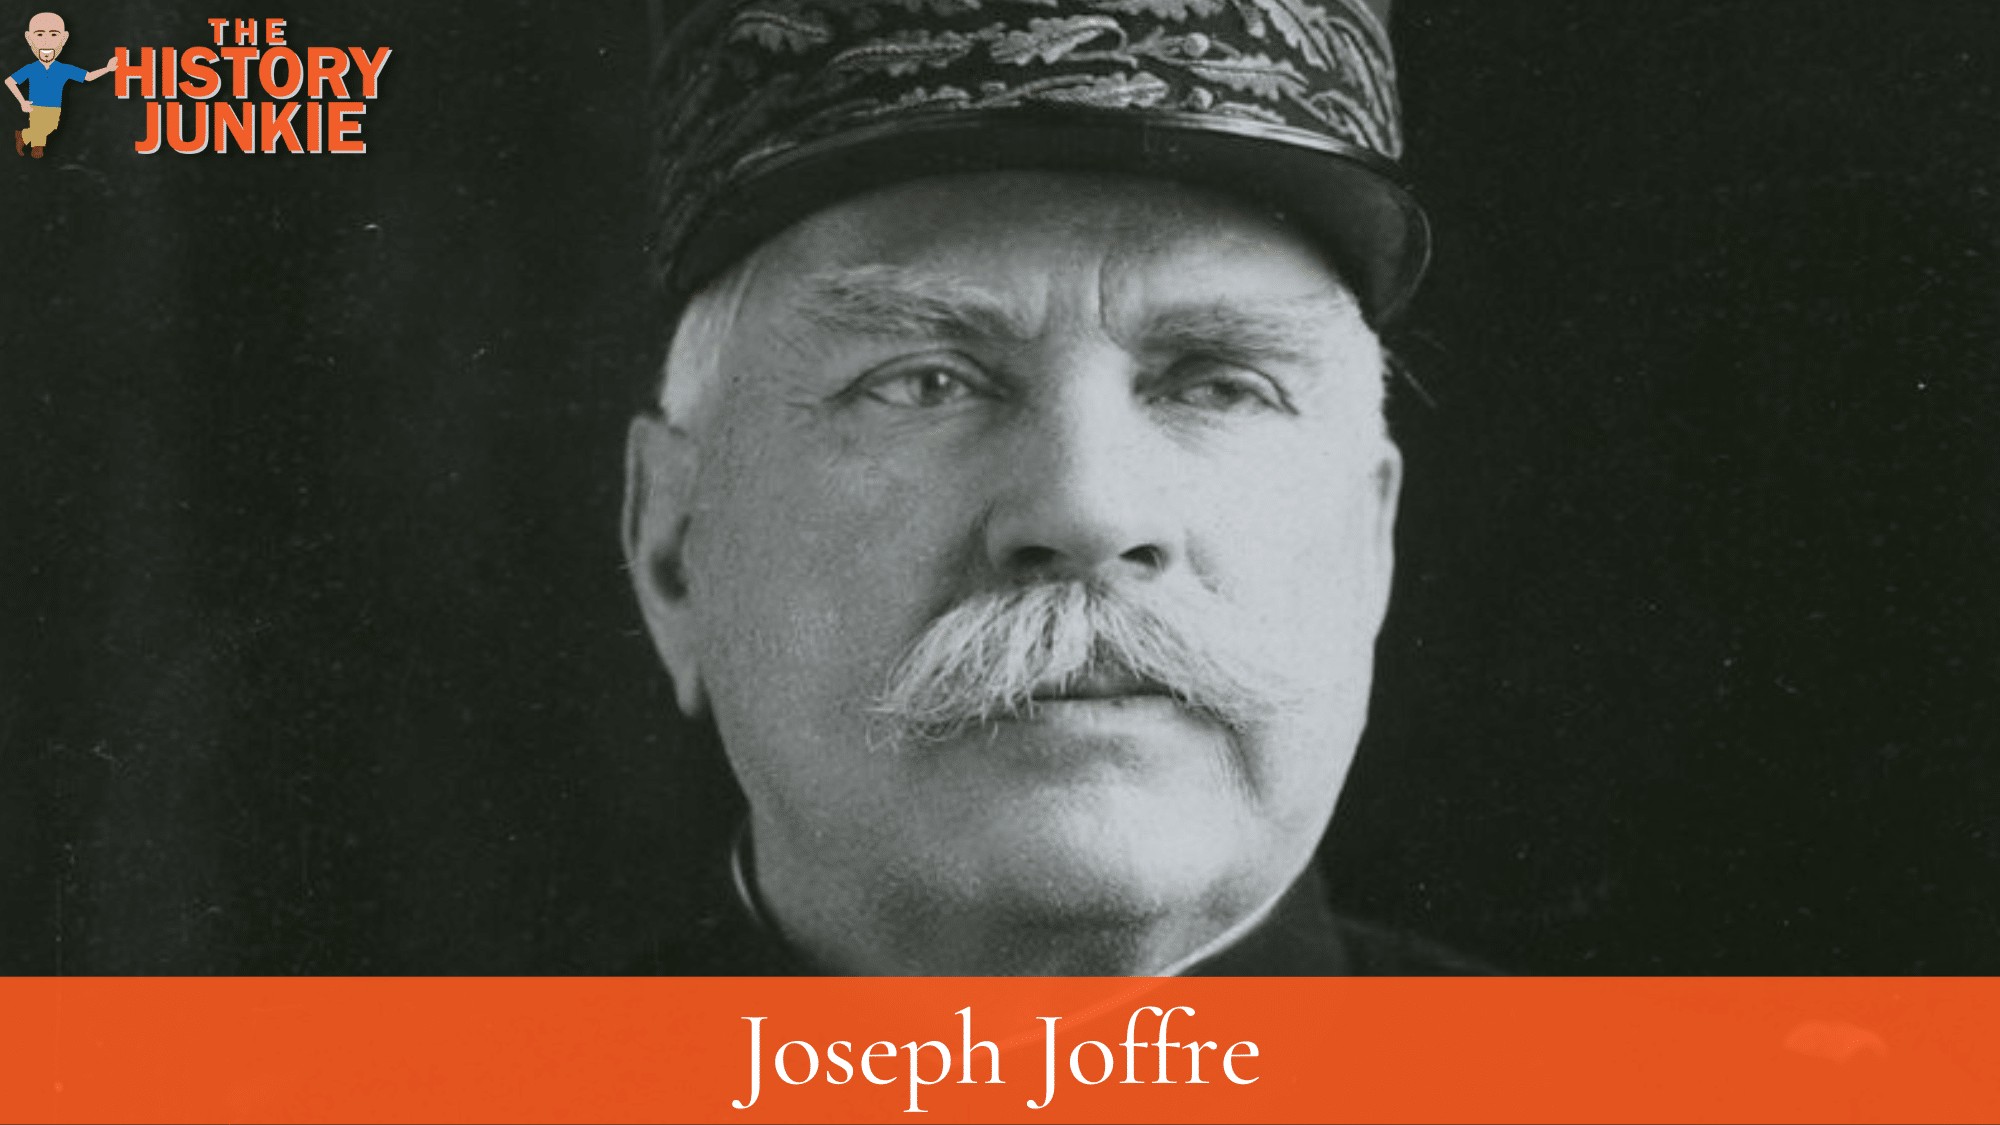 Joseph Joffre architect of Plan XVII